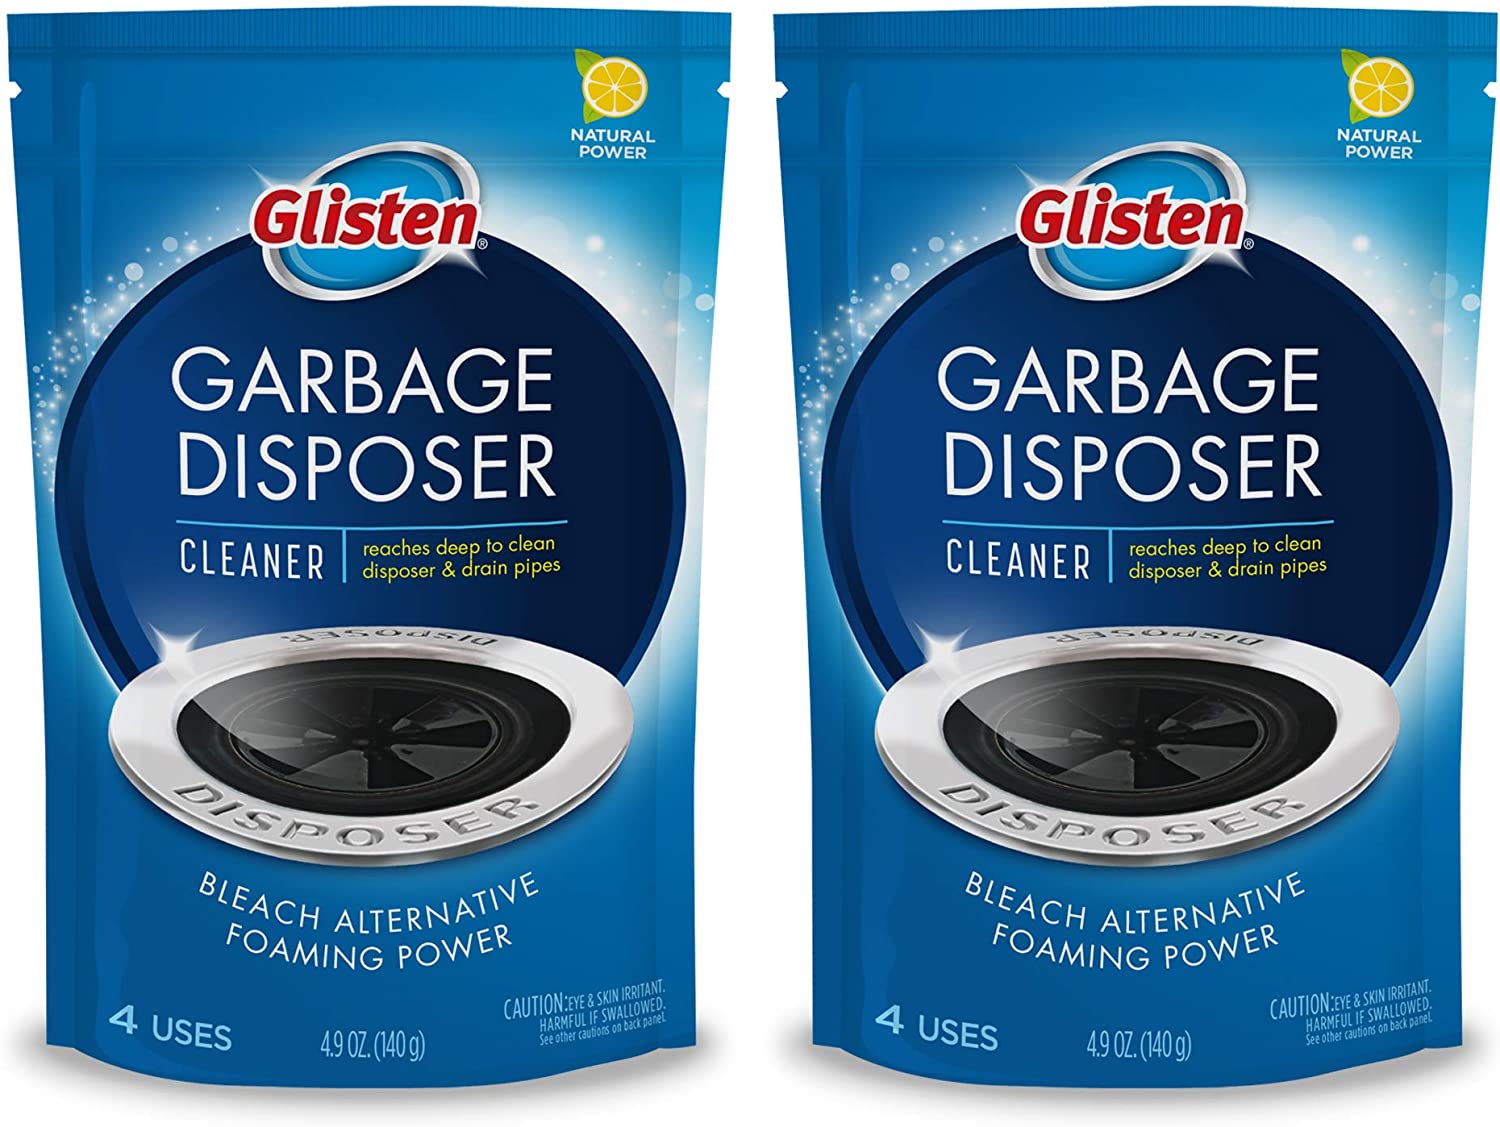 Glisten DP06N-PB Garbage Disposer Foaming Cleaner, Lemon Scent, 2-Pack (8 Uses), 2 Pack, Blue, 9 Ounce